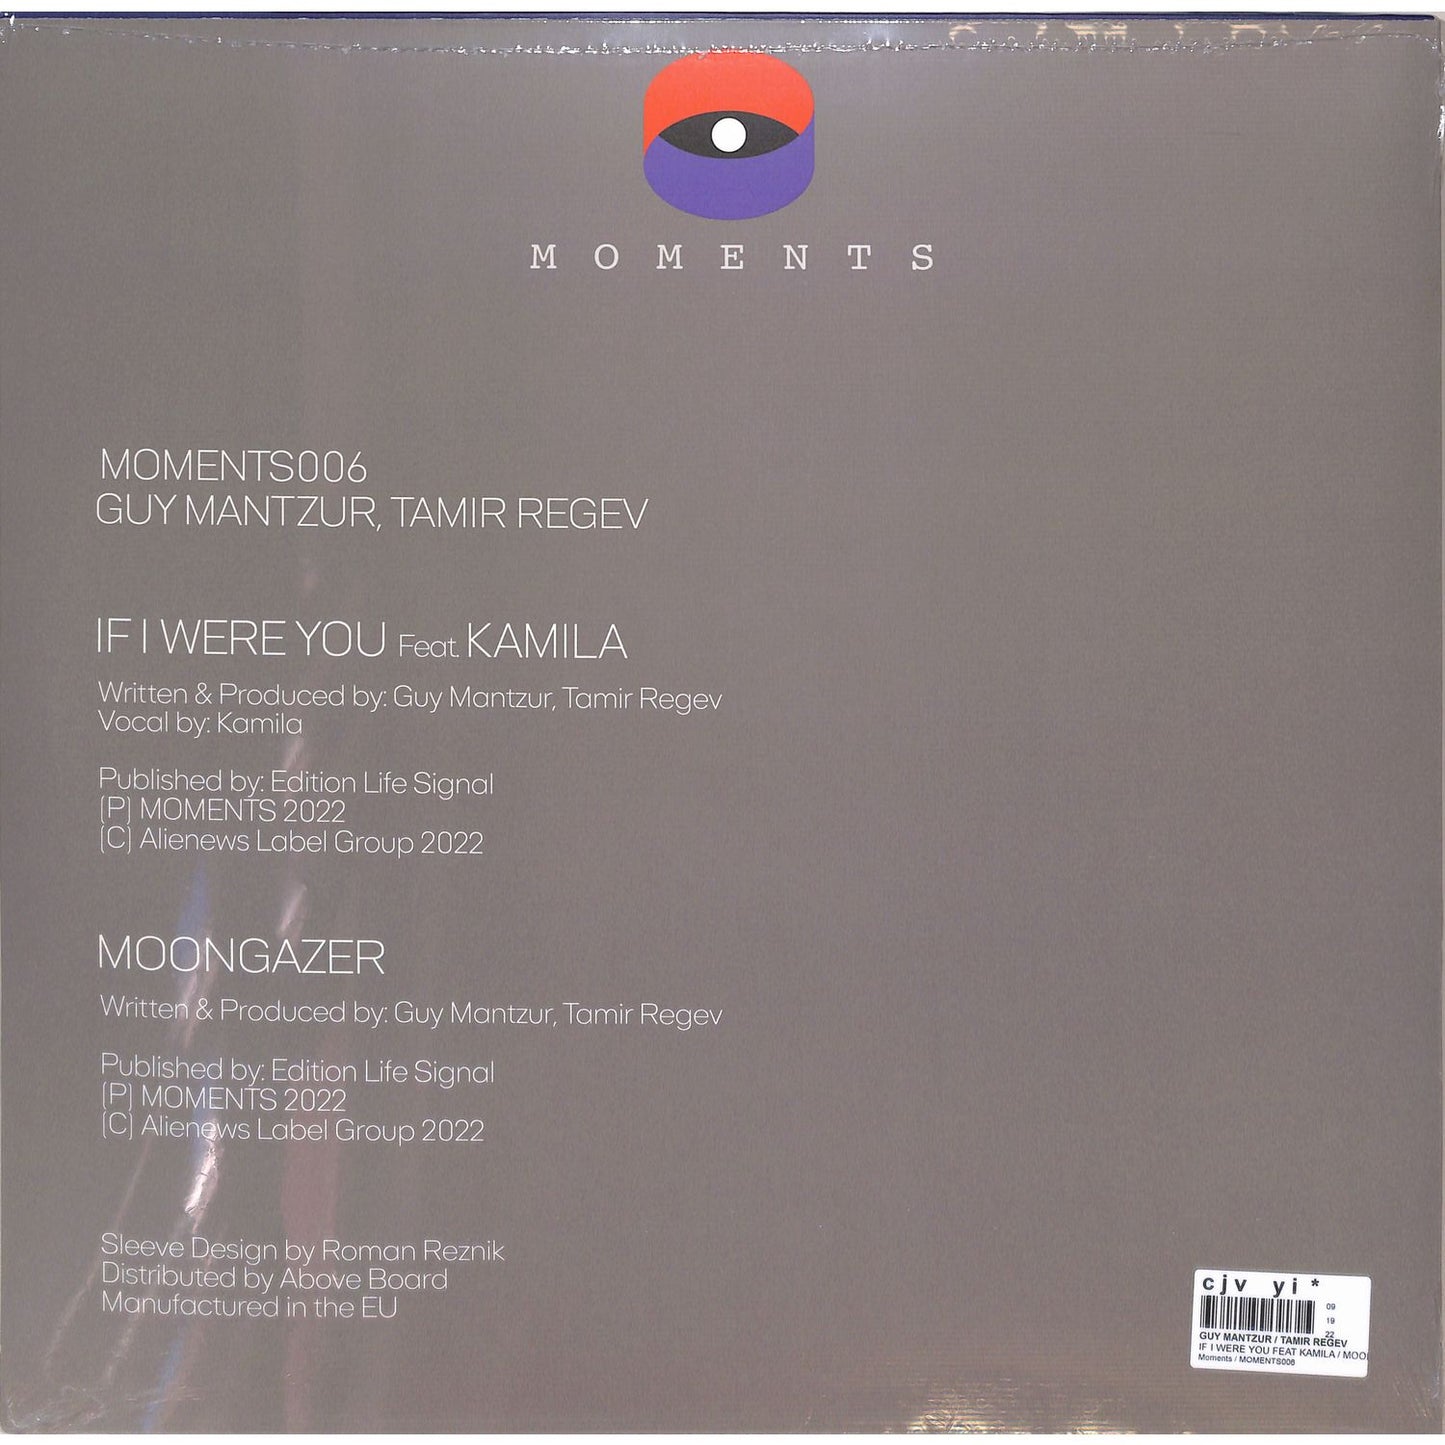 Guy Mantzur, Tamir Regev - If I were You feat. Kamila / Moongazer [Moments]